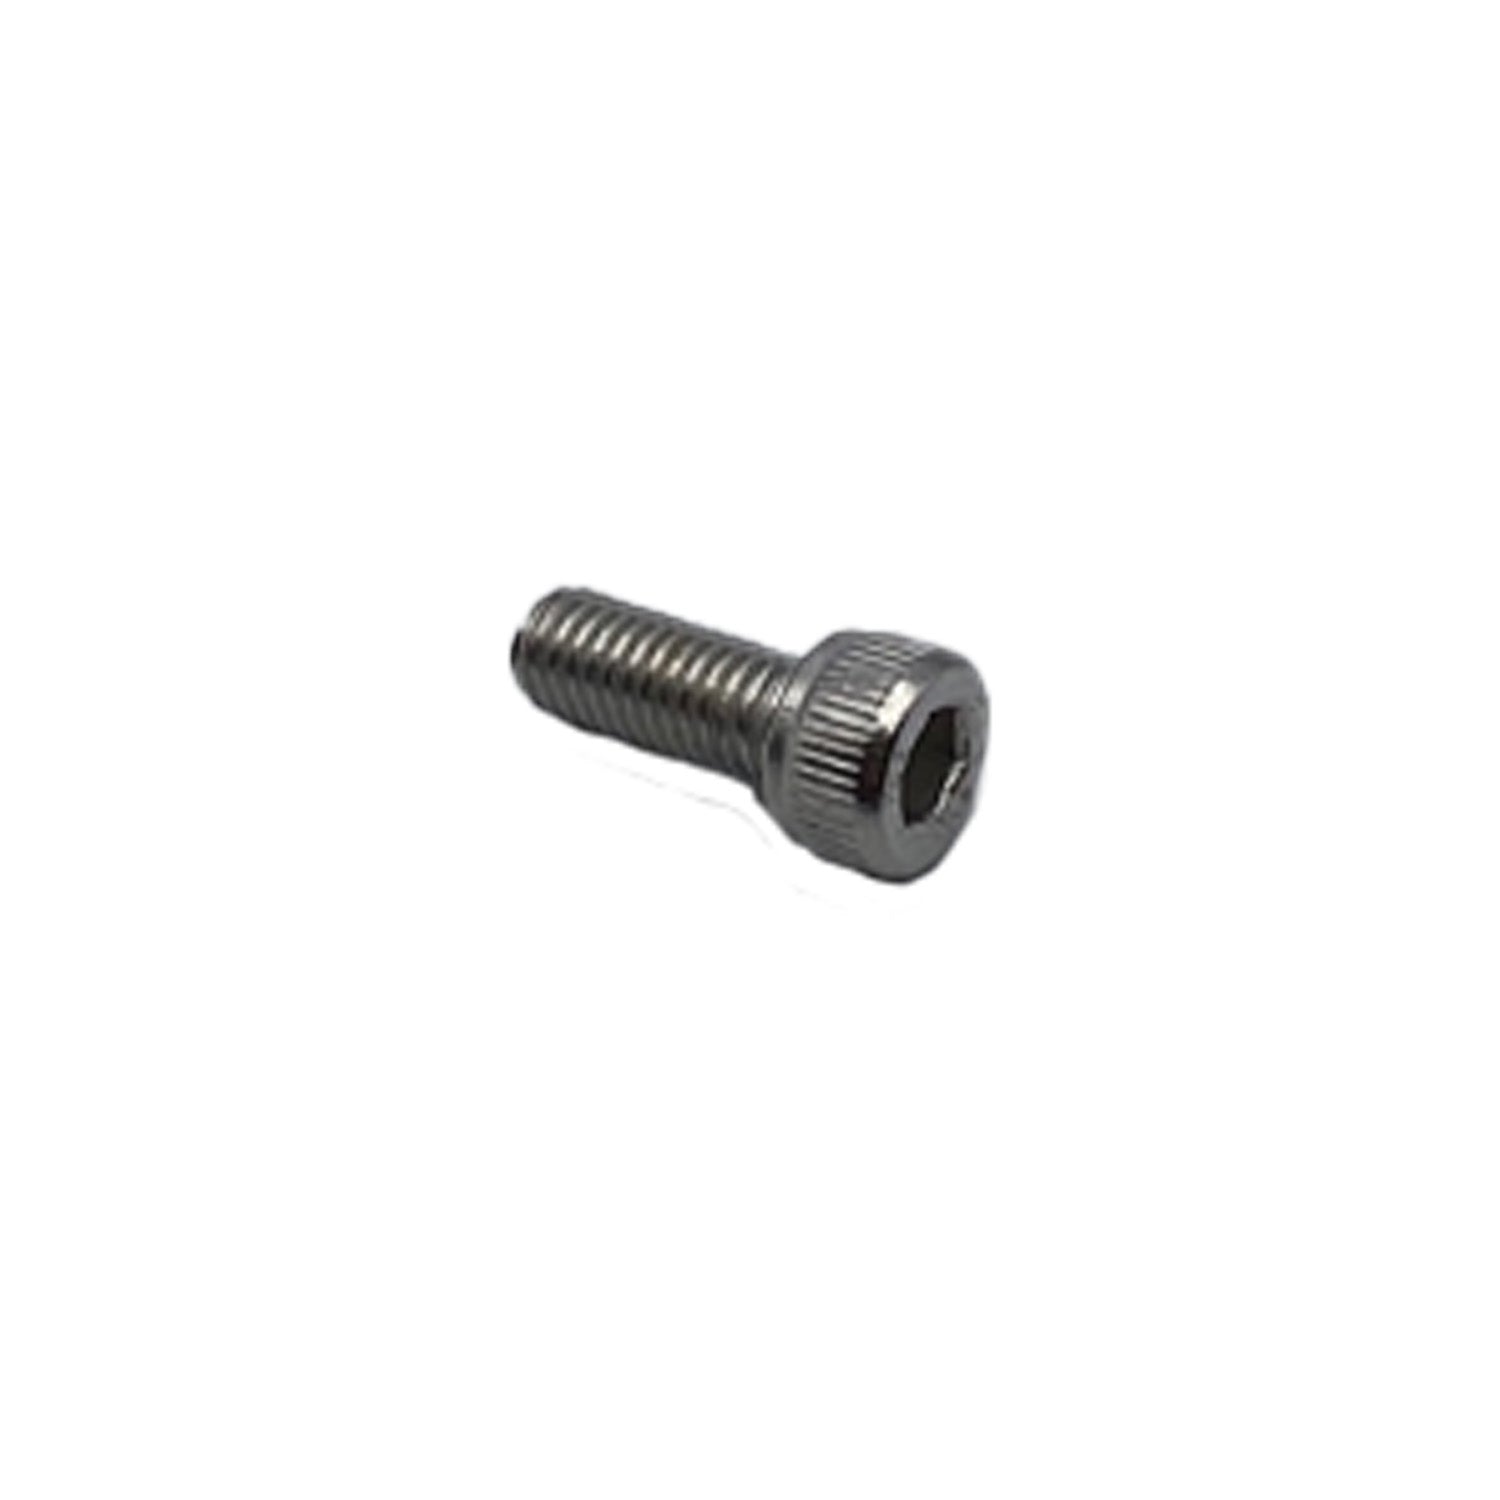 5mm x 12mm Hex bolt screws